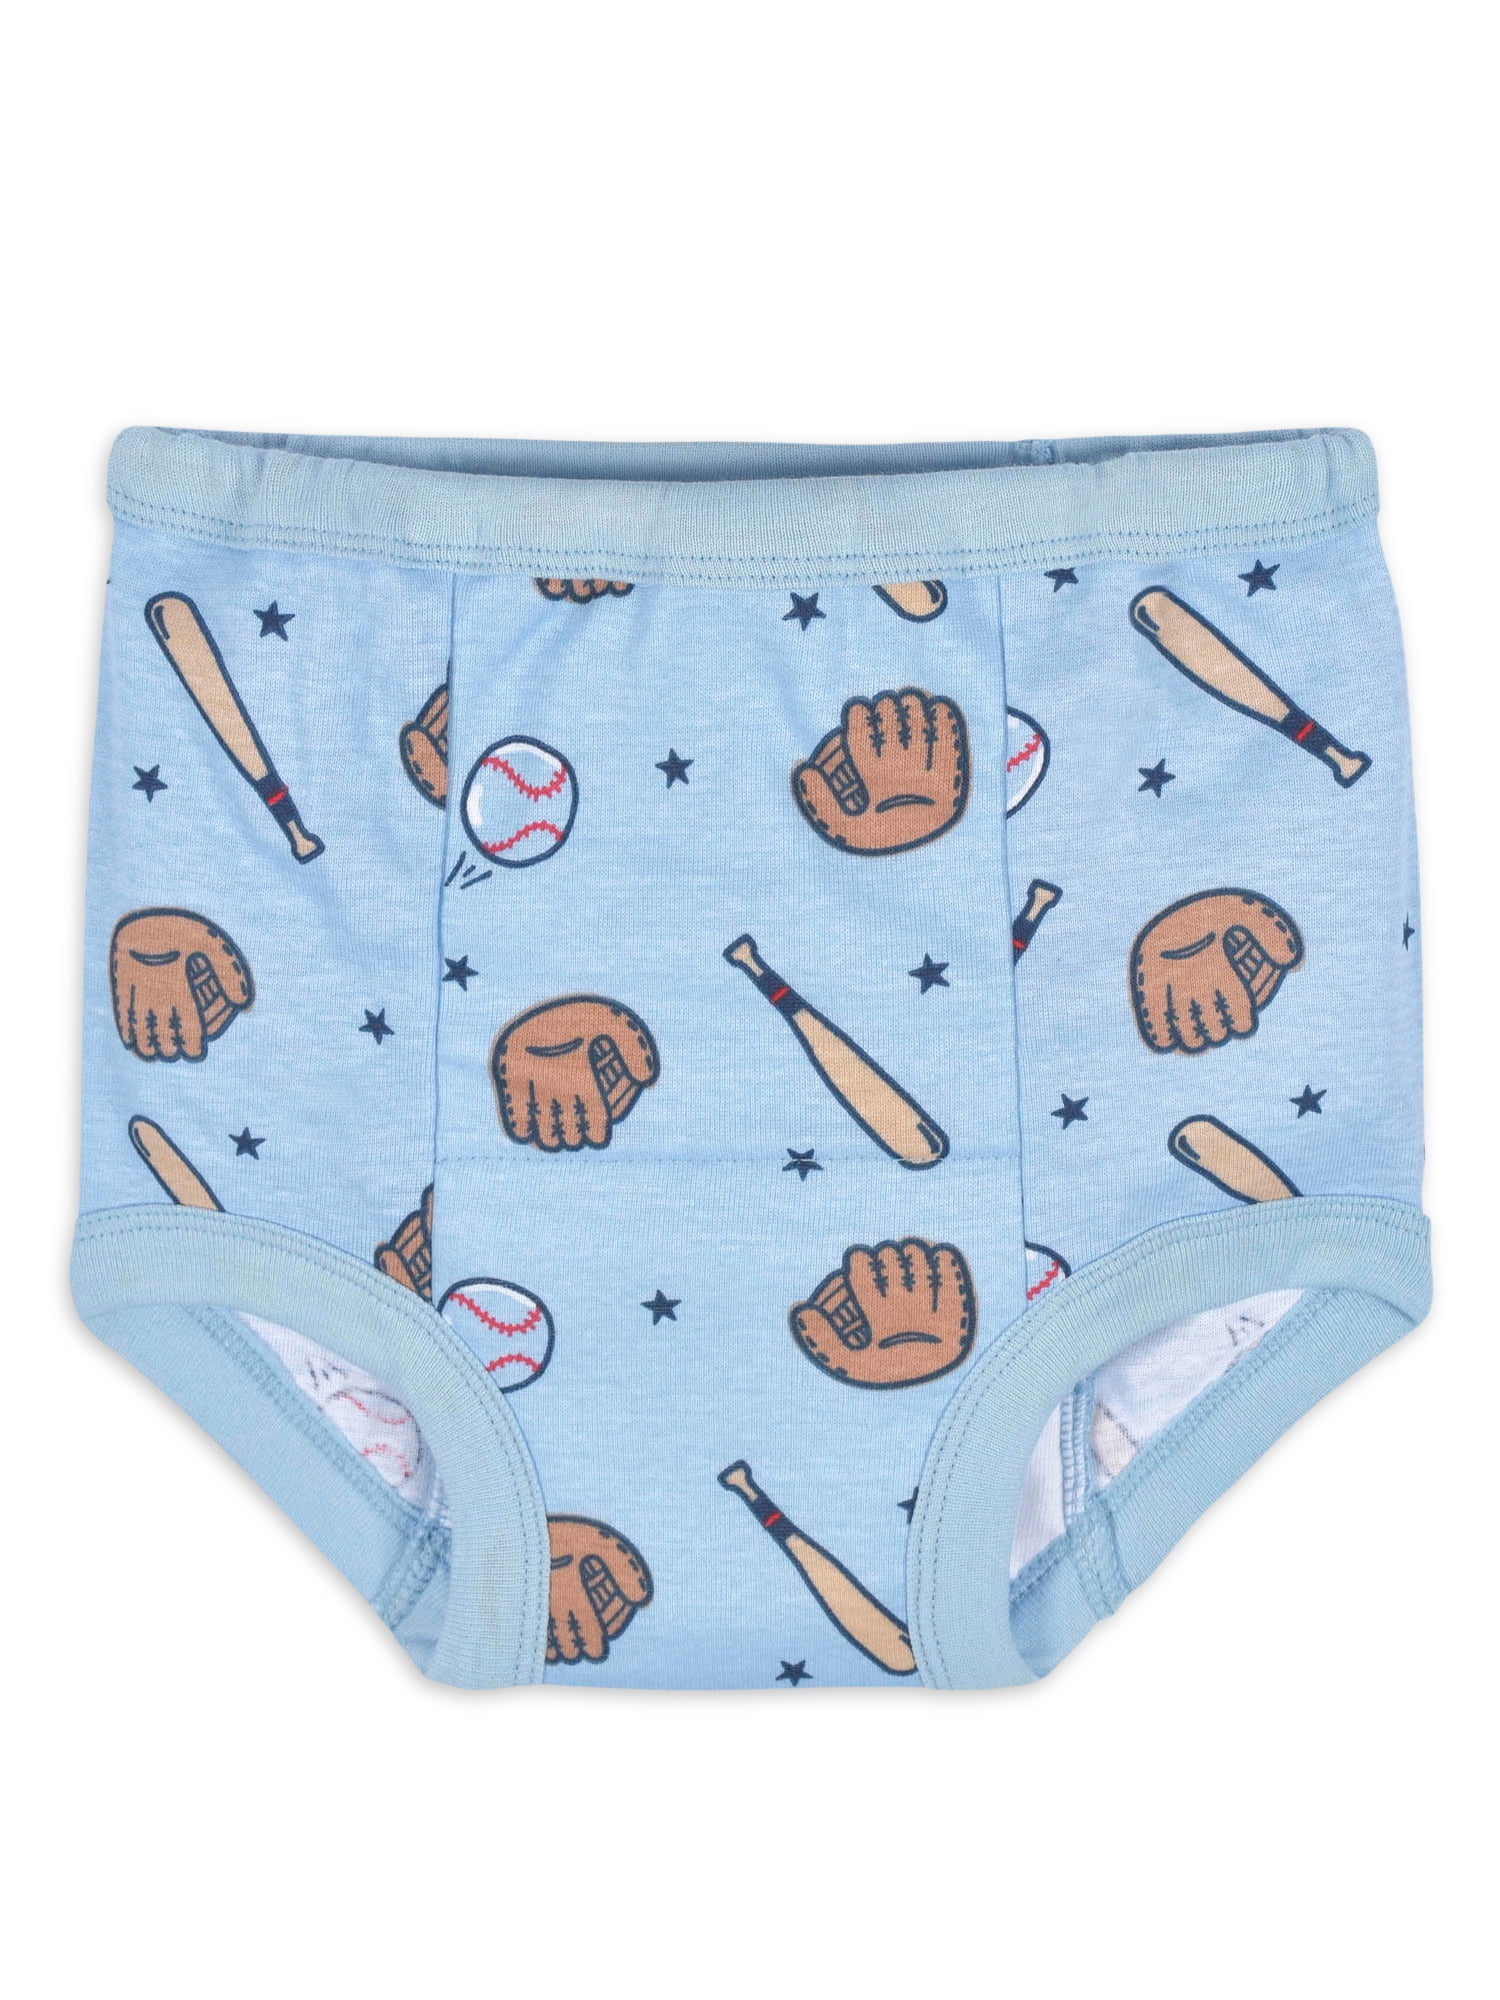 Gerber Toddler Boy Training Pants, 4-Pack (2T - 3T) 